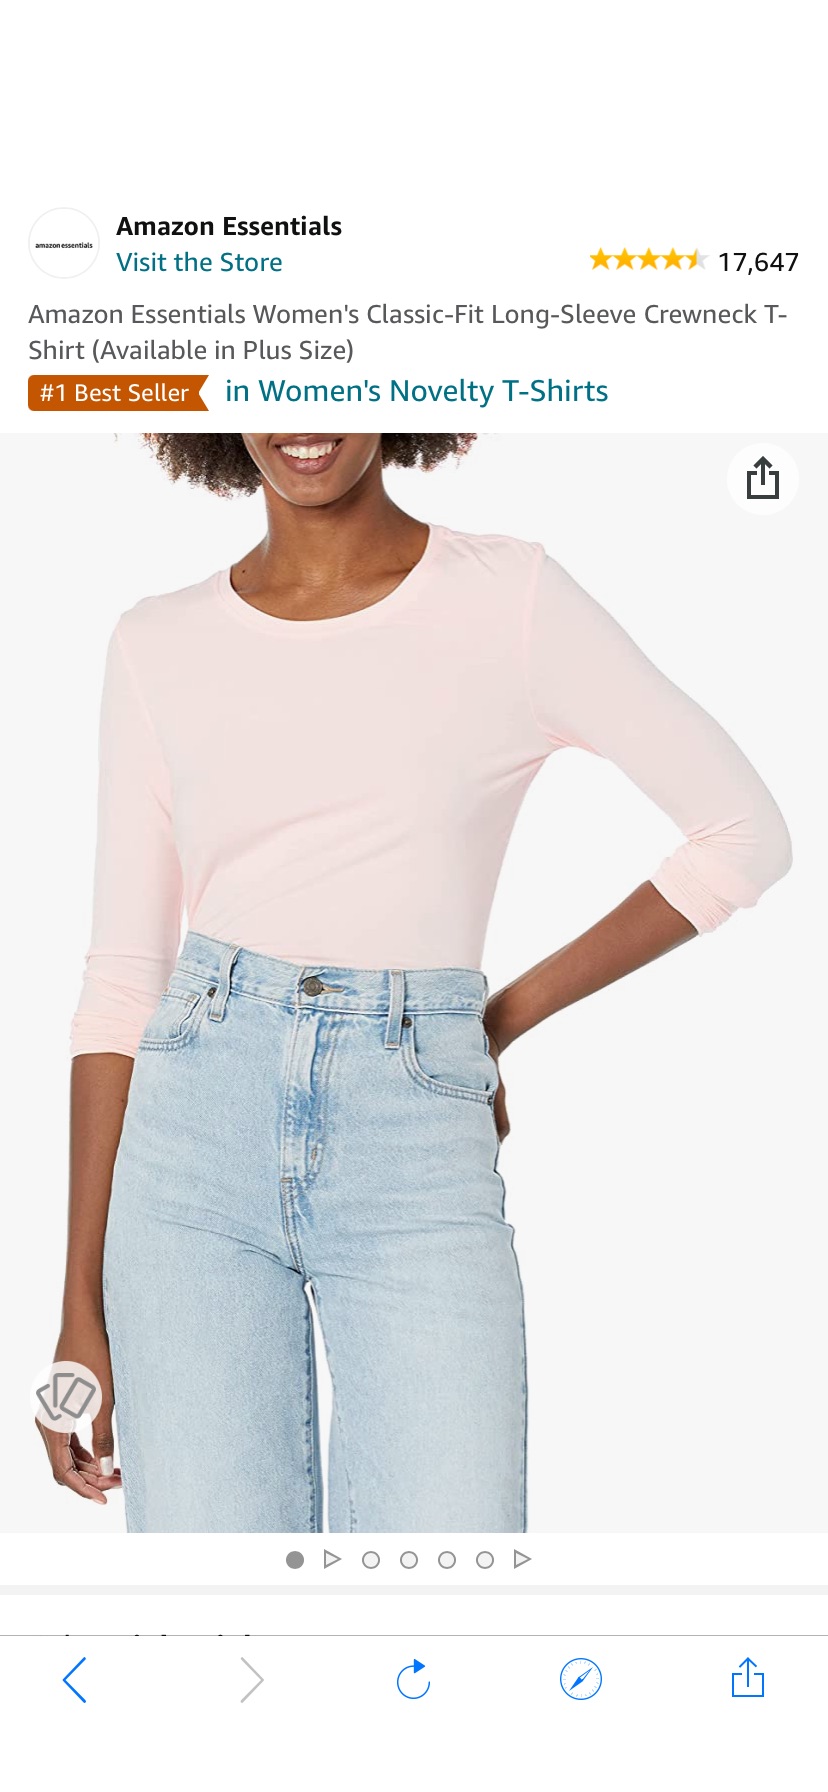 Amazon.com: Amazon Essentials Women's Classic-Fit Long-Sleeve Crewneck T-Shirt